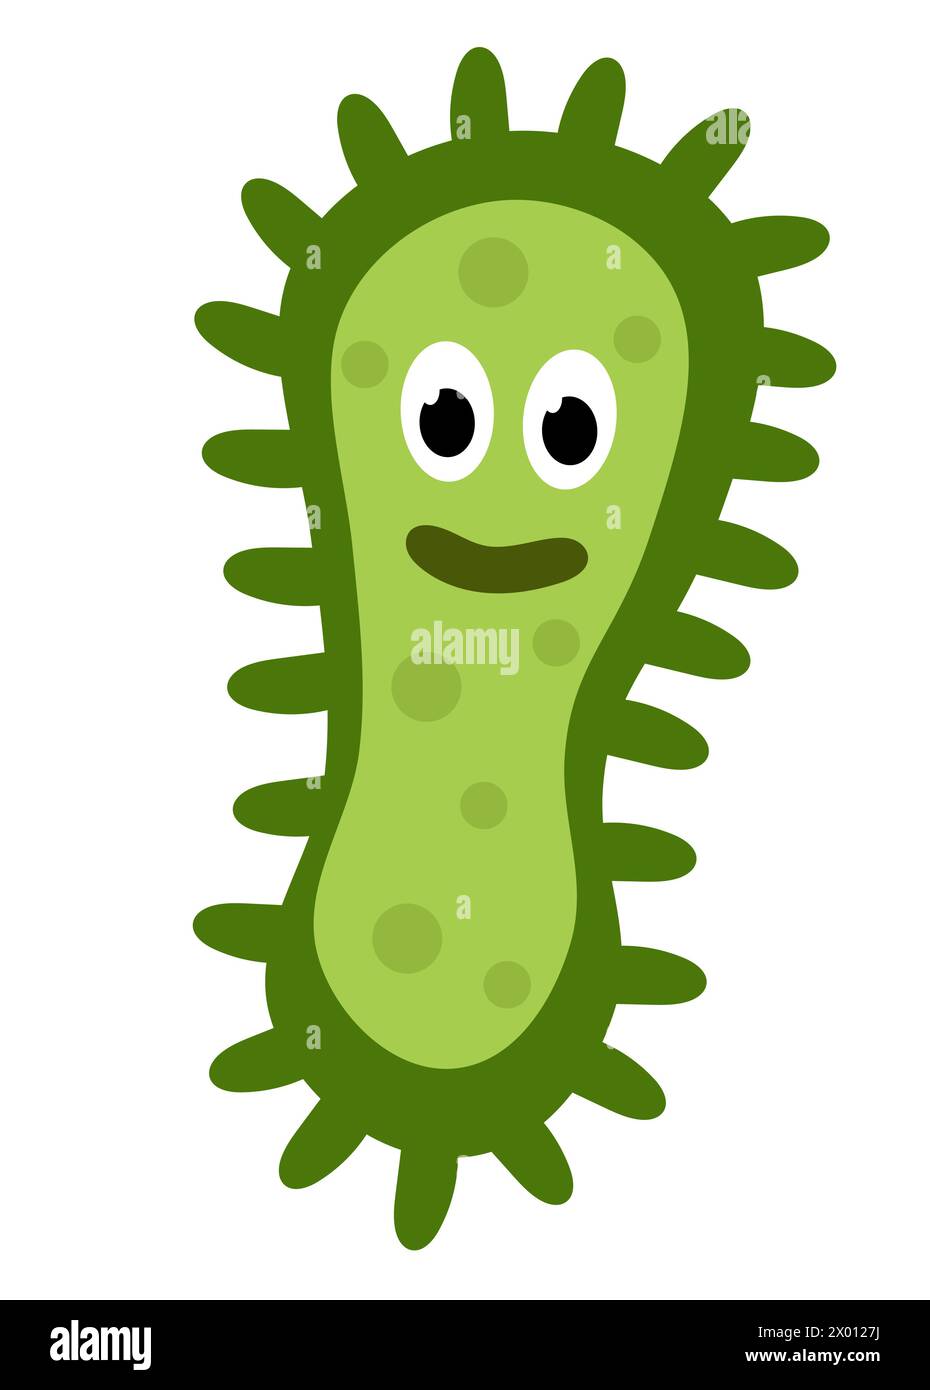 Cute cartoon green character bacteria, microbe, germ. Microbiology organism. Mascot expressing emotion. Vector children illustration in flat design. Stock Vector